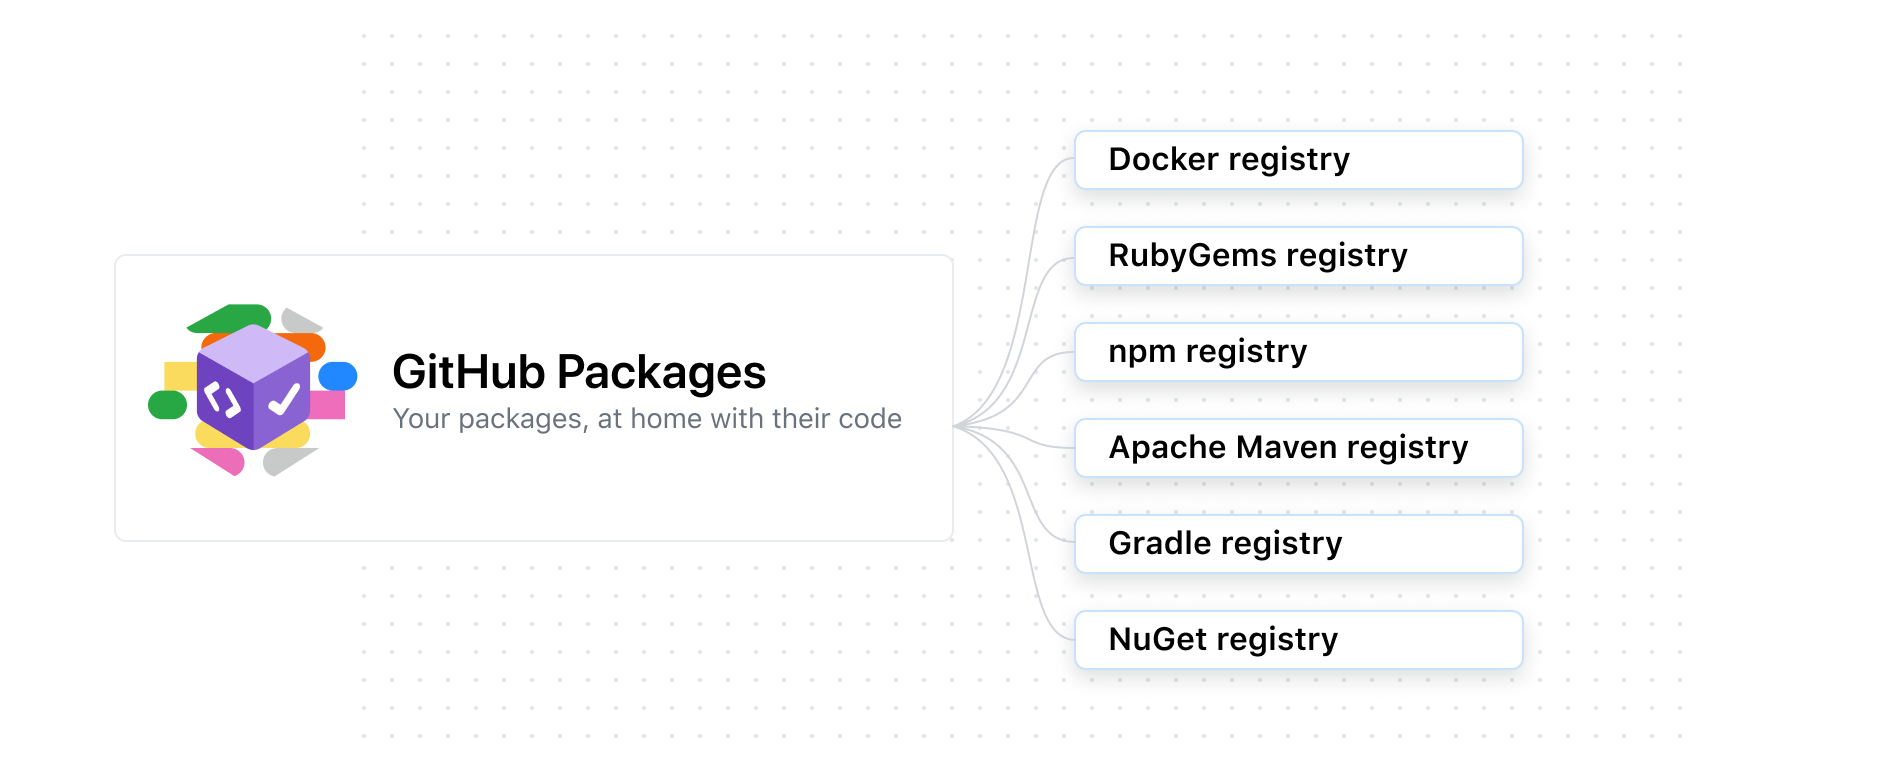 Diagram showing packages support for the Docker registry, RubyGems, npm, Apache Maven, Gradle, NuGet, and Docker